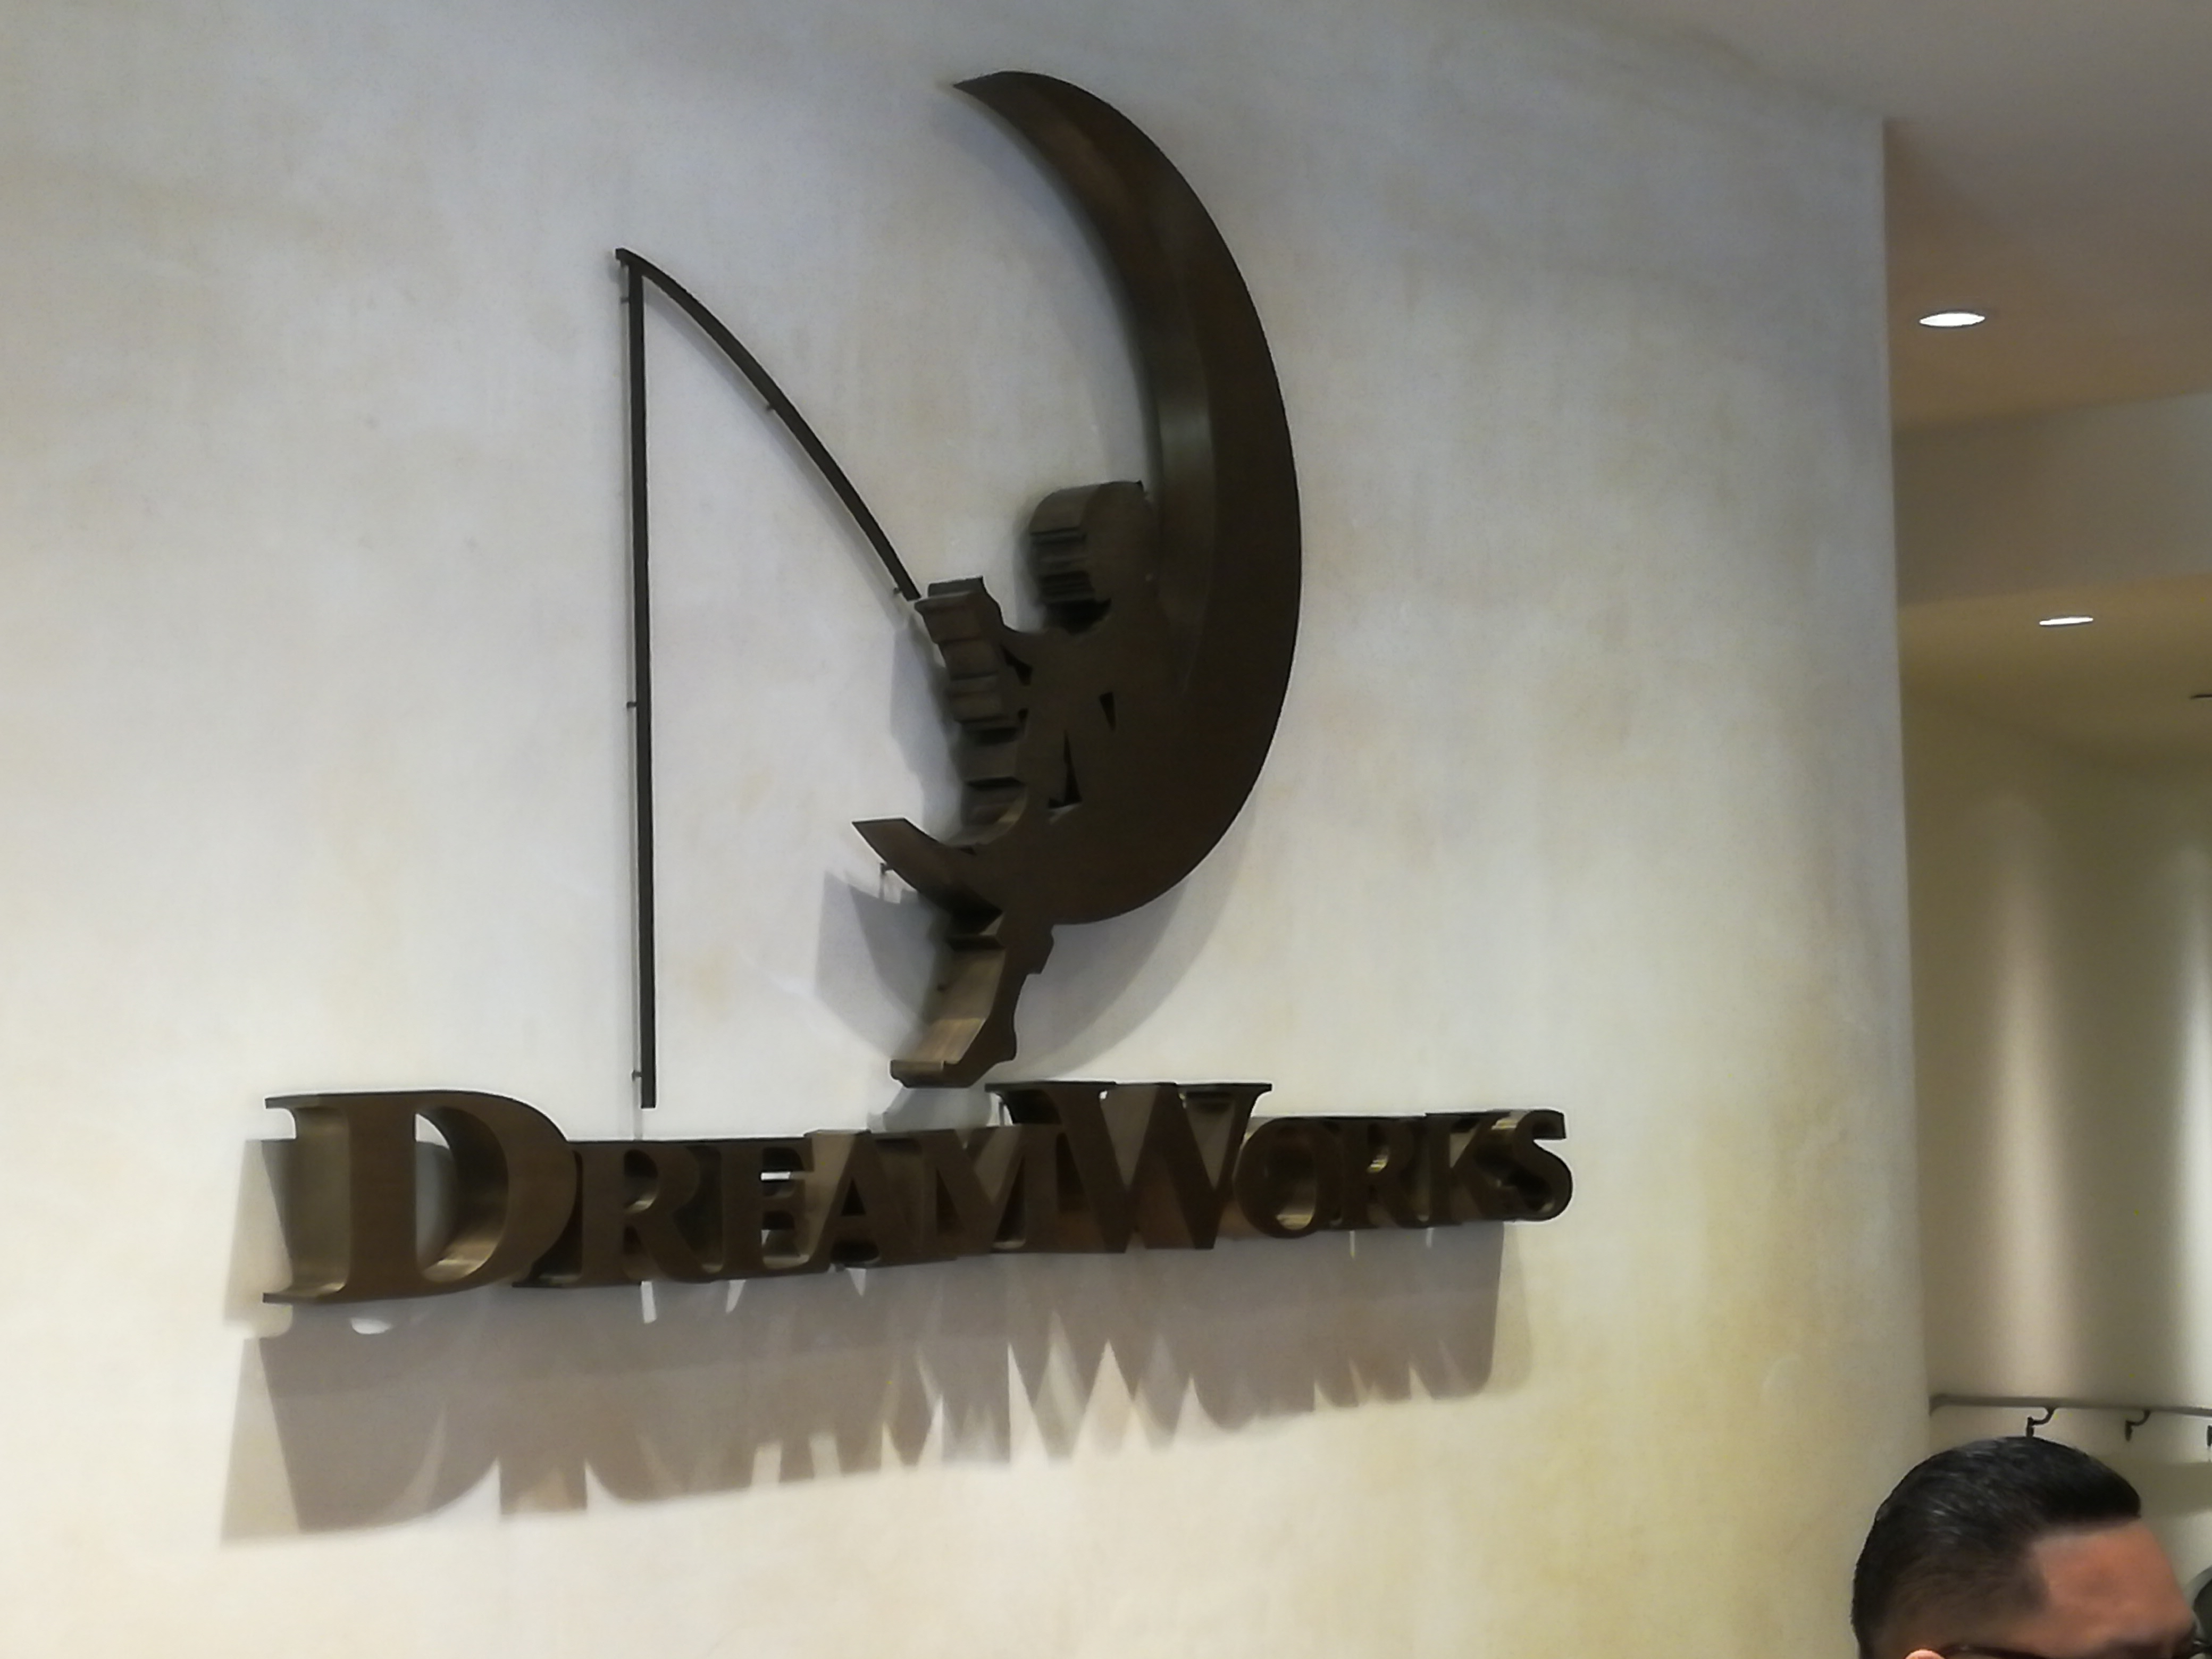 Tour at Dreamworks Animation Studios ~ Maria Cominetti